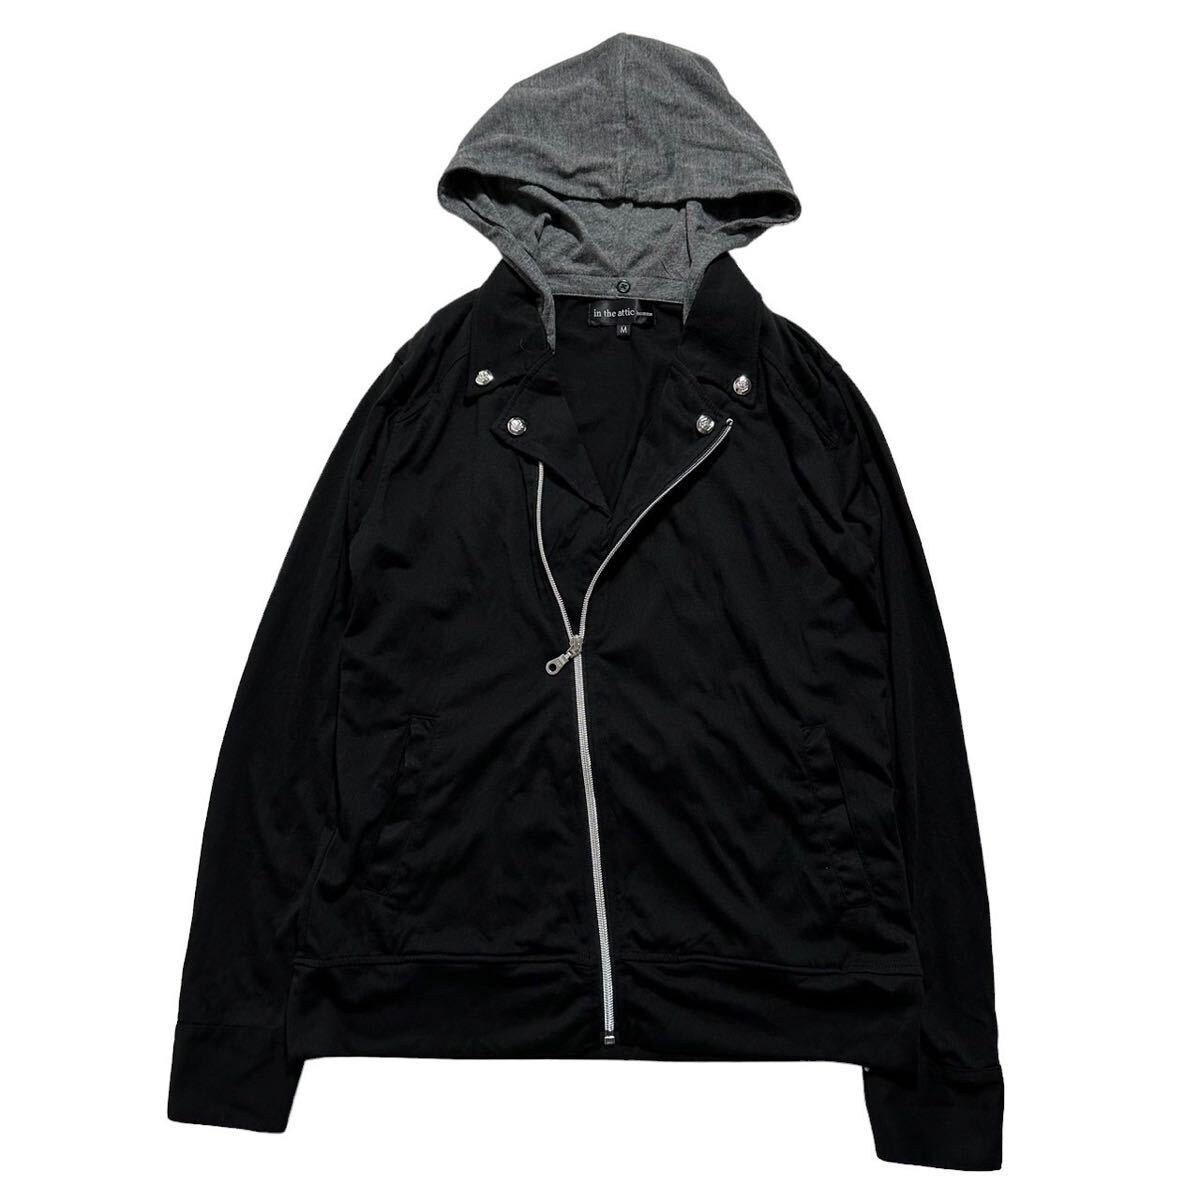 00s Japanese Label in the attic design hoodie jacket Y2K 14th addiction share spirit ifsixwasnine kmrii lgb goa GLAD NEWS civarizeの画像1